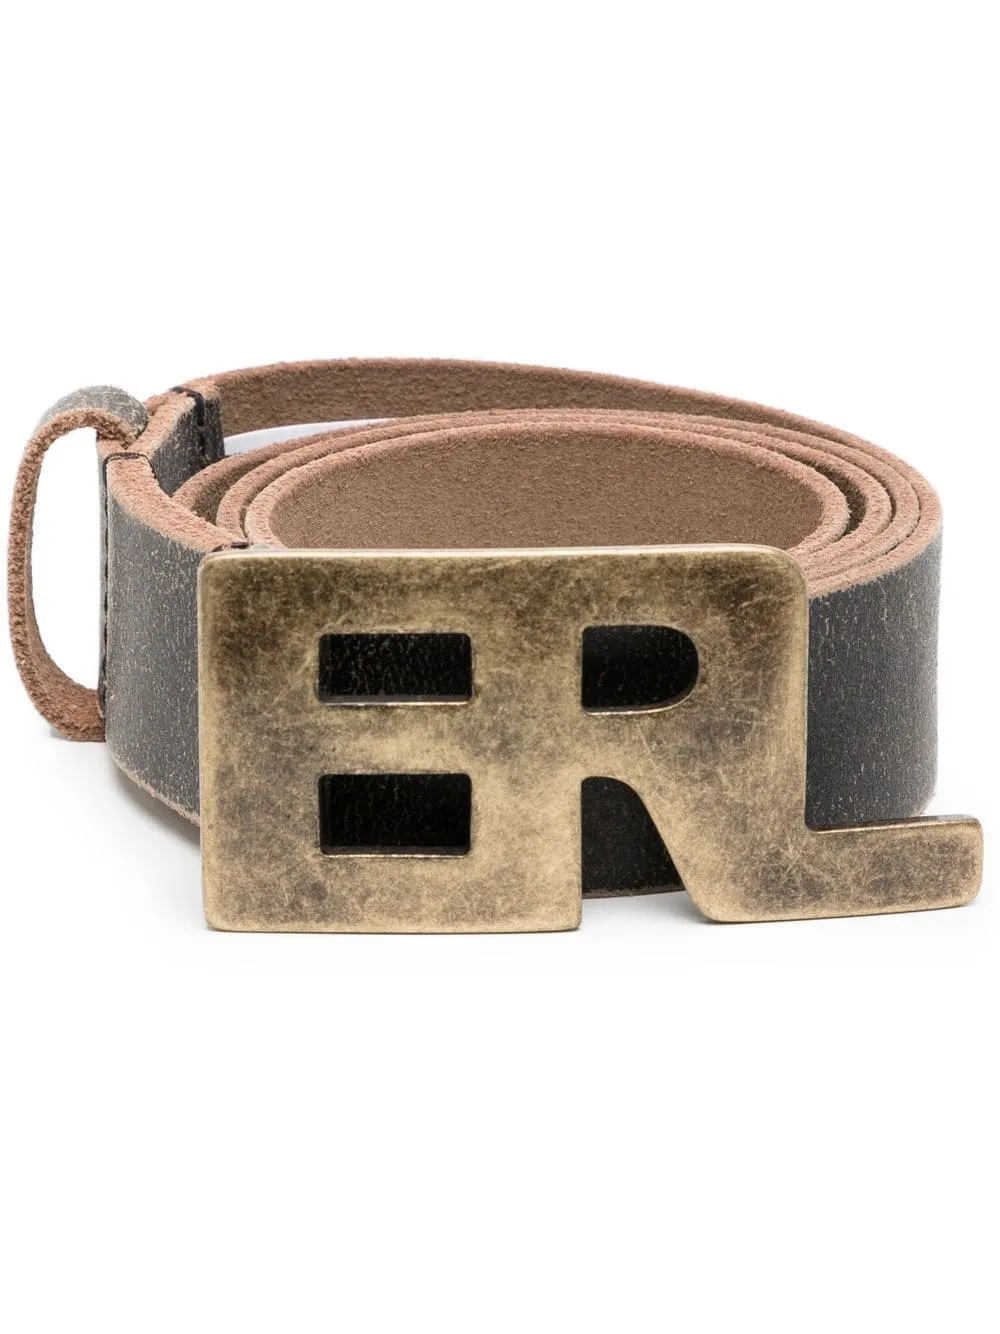 Cintura unisex in pelle con logo in metallo